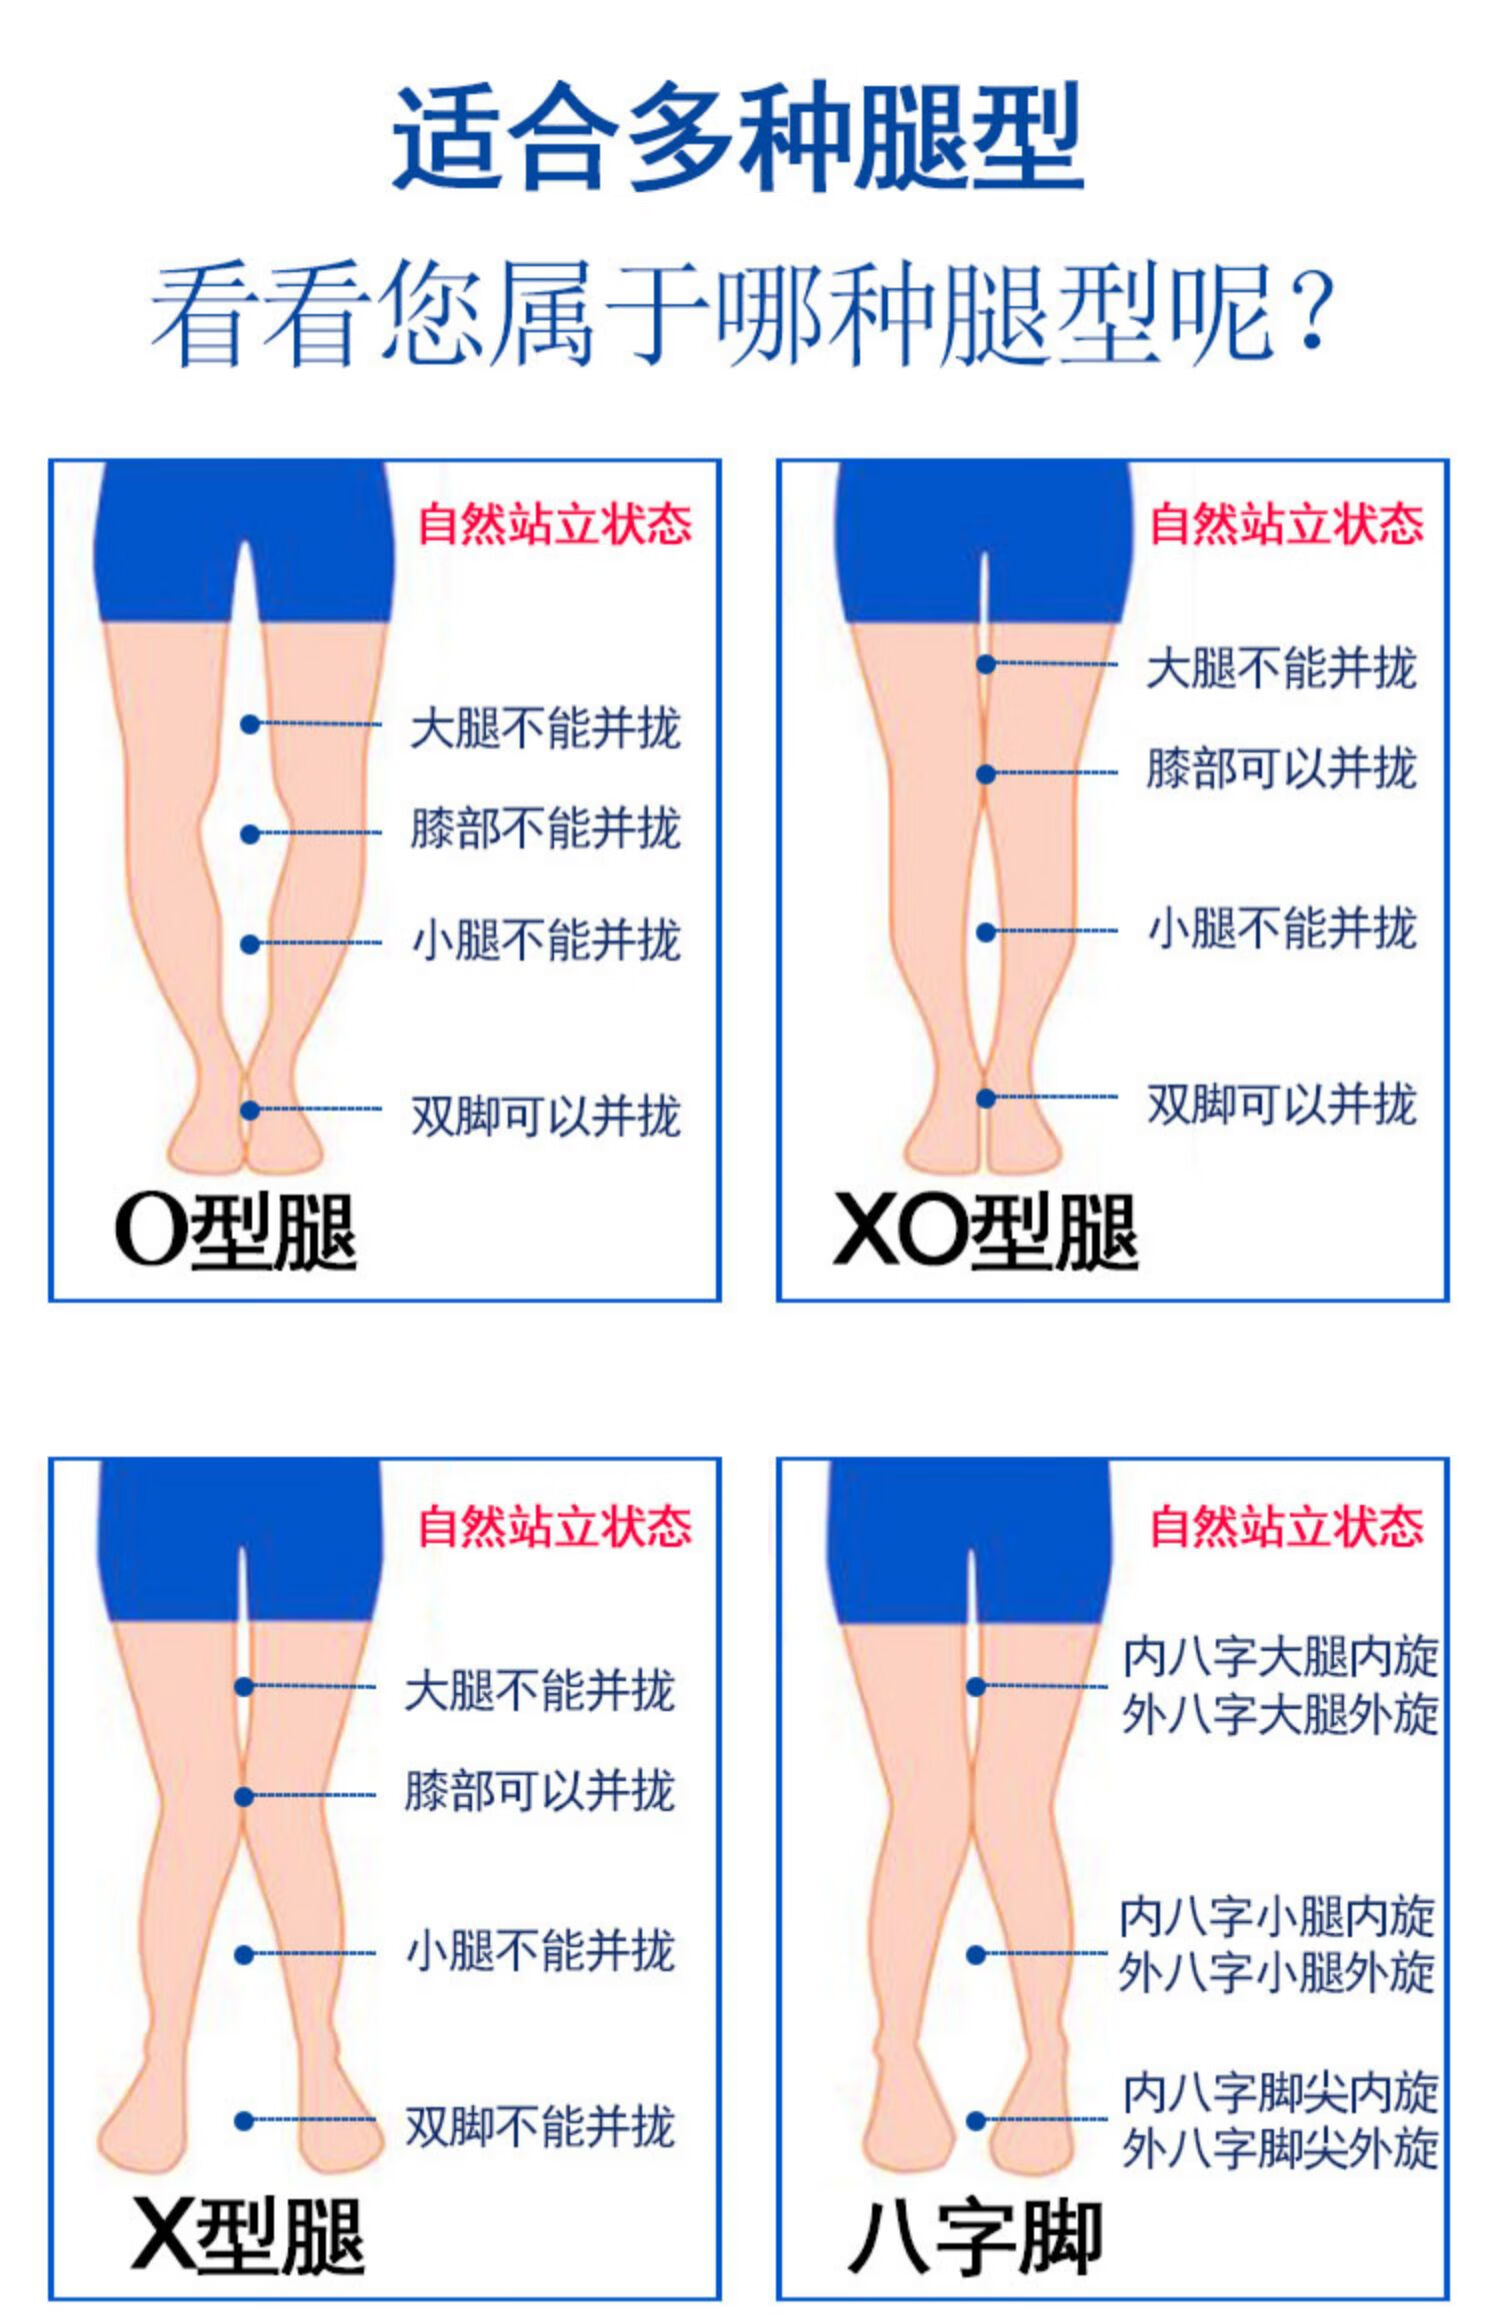 x型腿o型腿区别图解图片